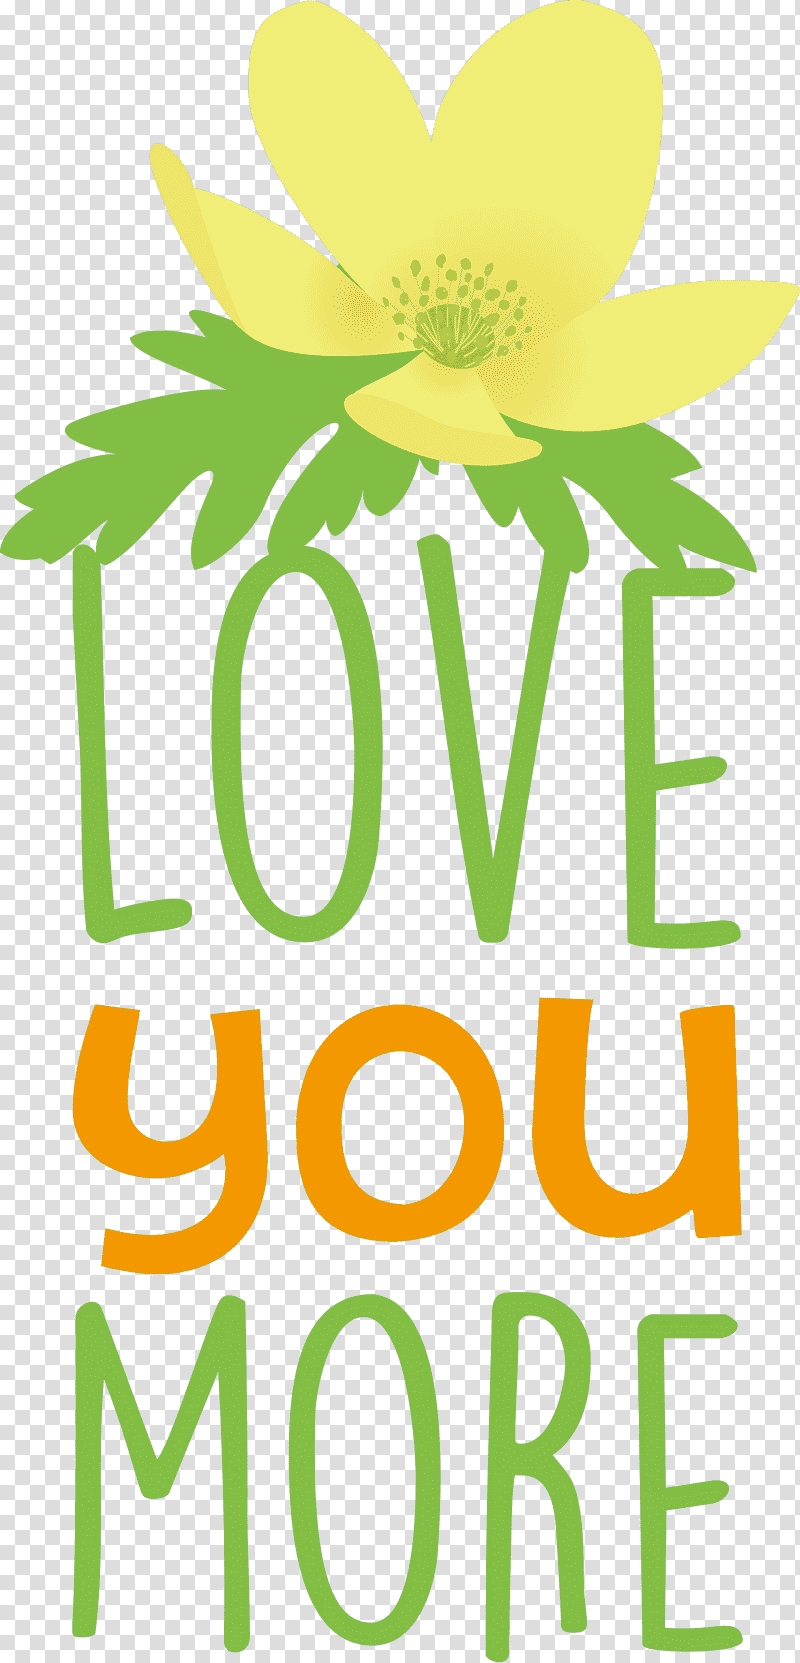 Love You More Valentines Day Valentine, Quote, Floral Design, Leaf, Plant Stem, Cut Flowers, Petal transparent background PNG clipart